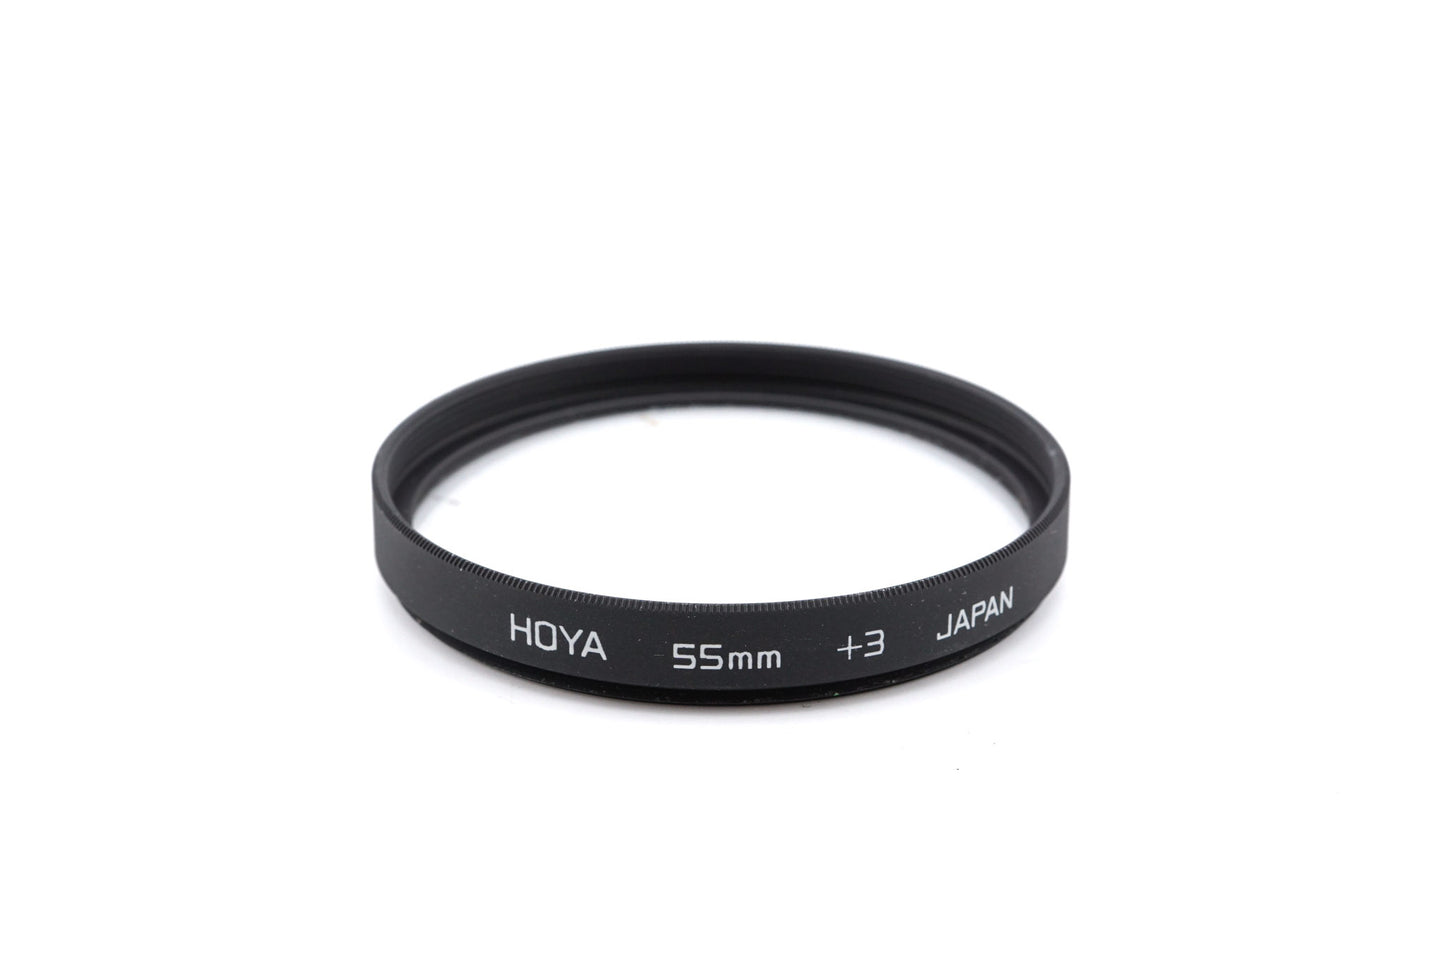 Hoya 55mm Close Up Filter +3